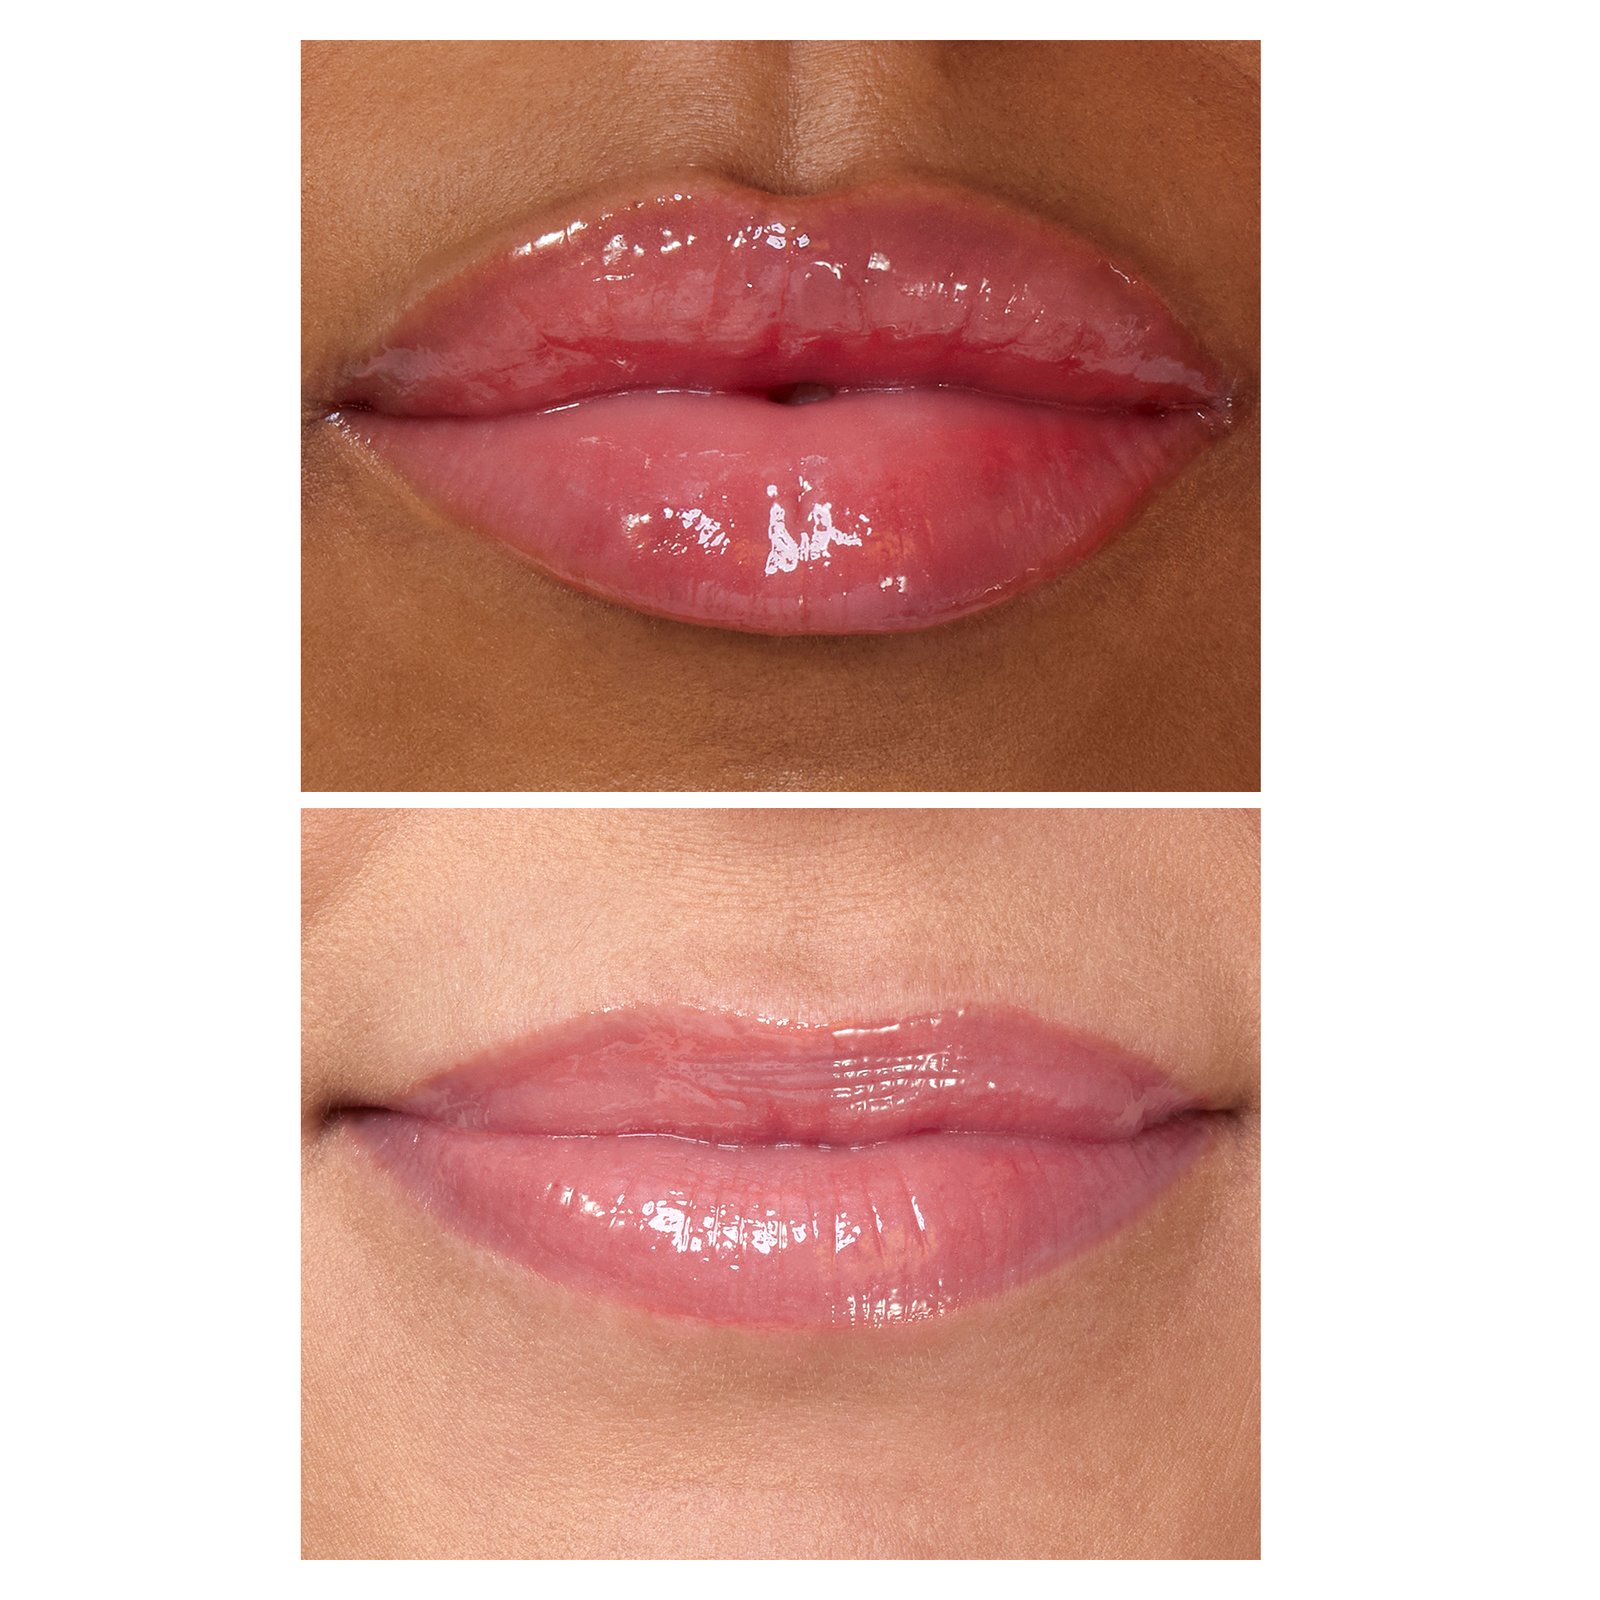 IsaDora Glossy Lip Treat 61 Pink Punch 13 ml